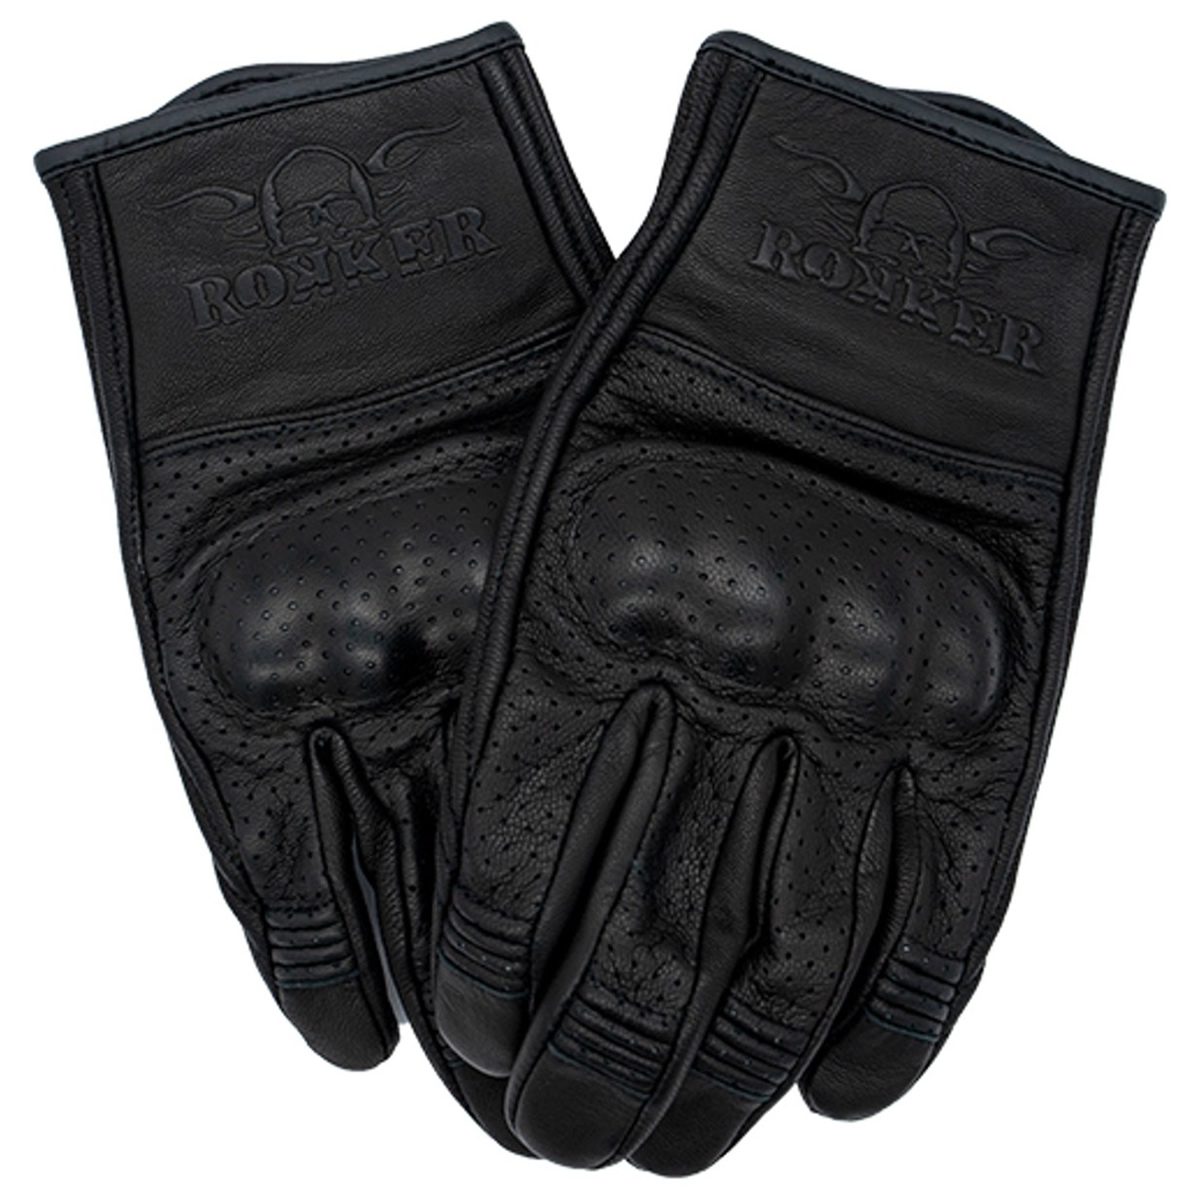 ROKKER Handschuhe Tucson Perforated, schwarz